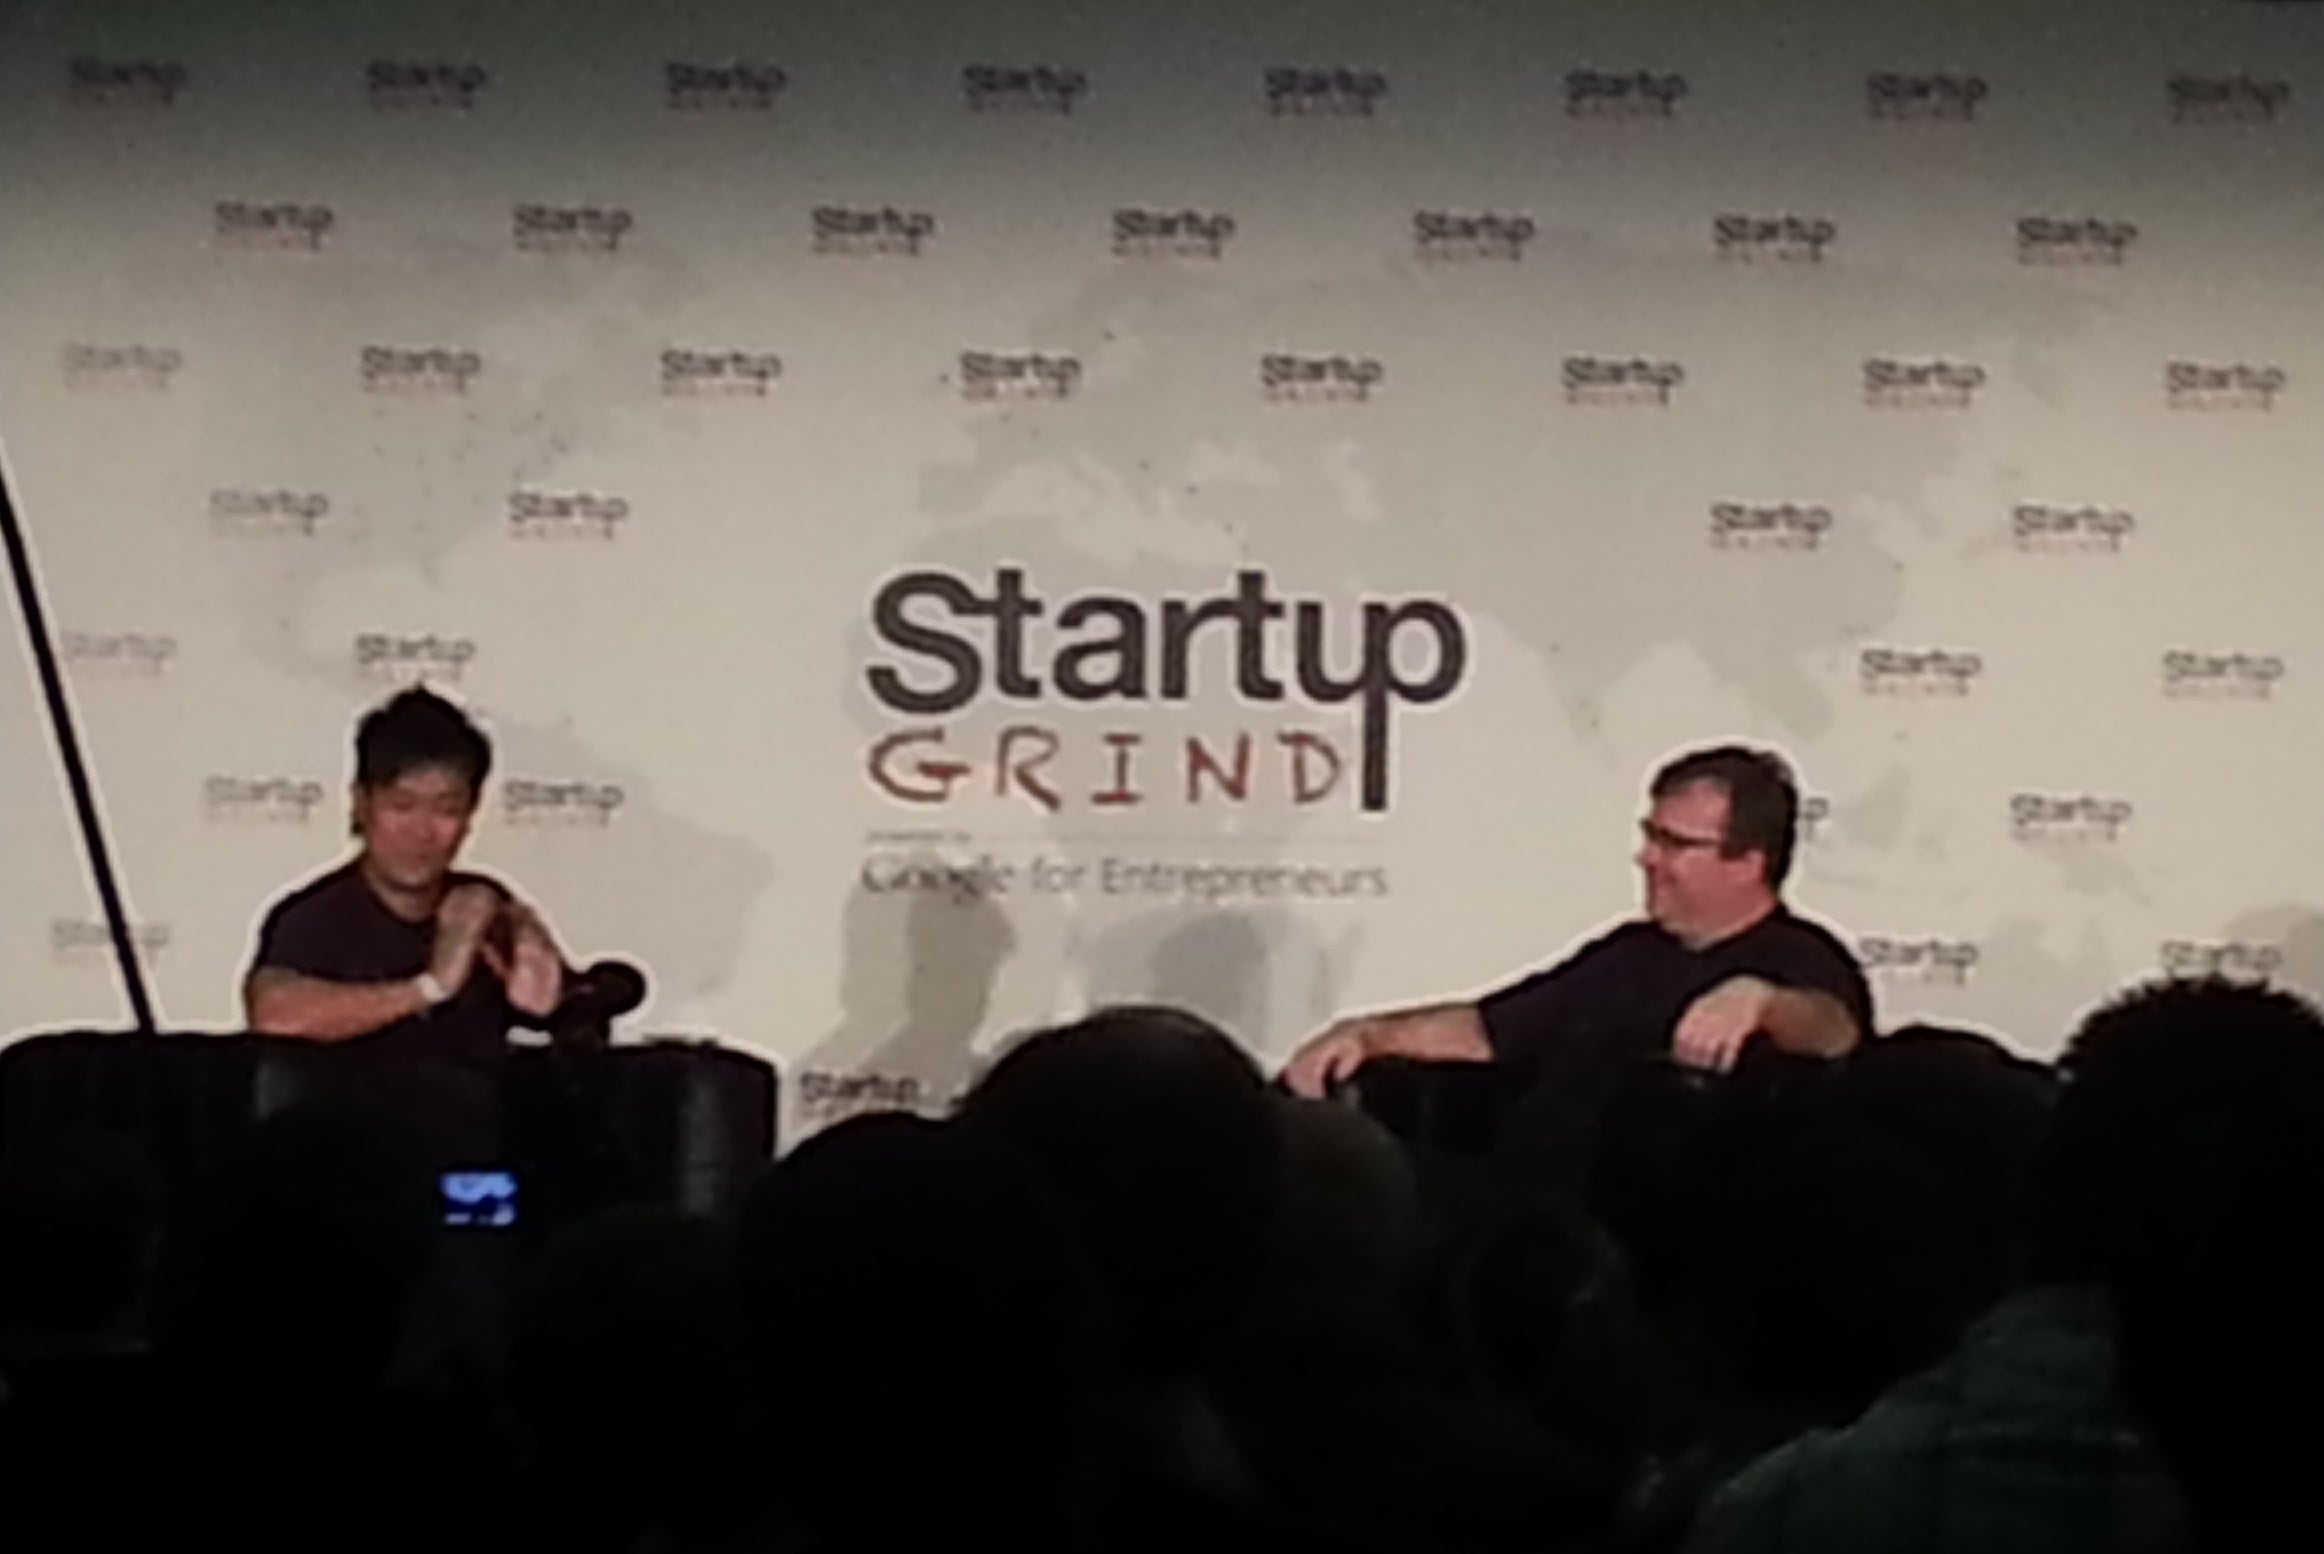 Speakers at Startup Grind 2014.